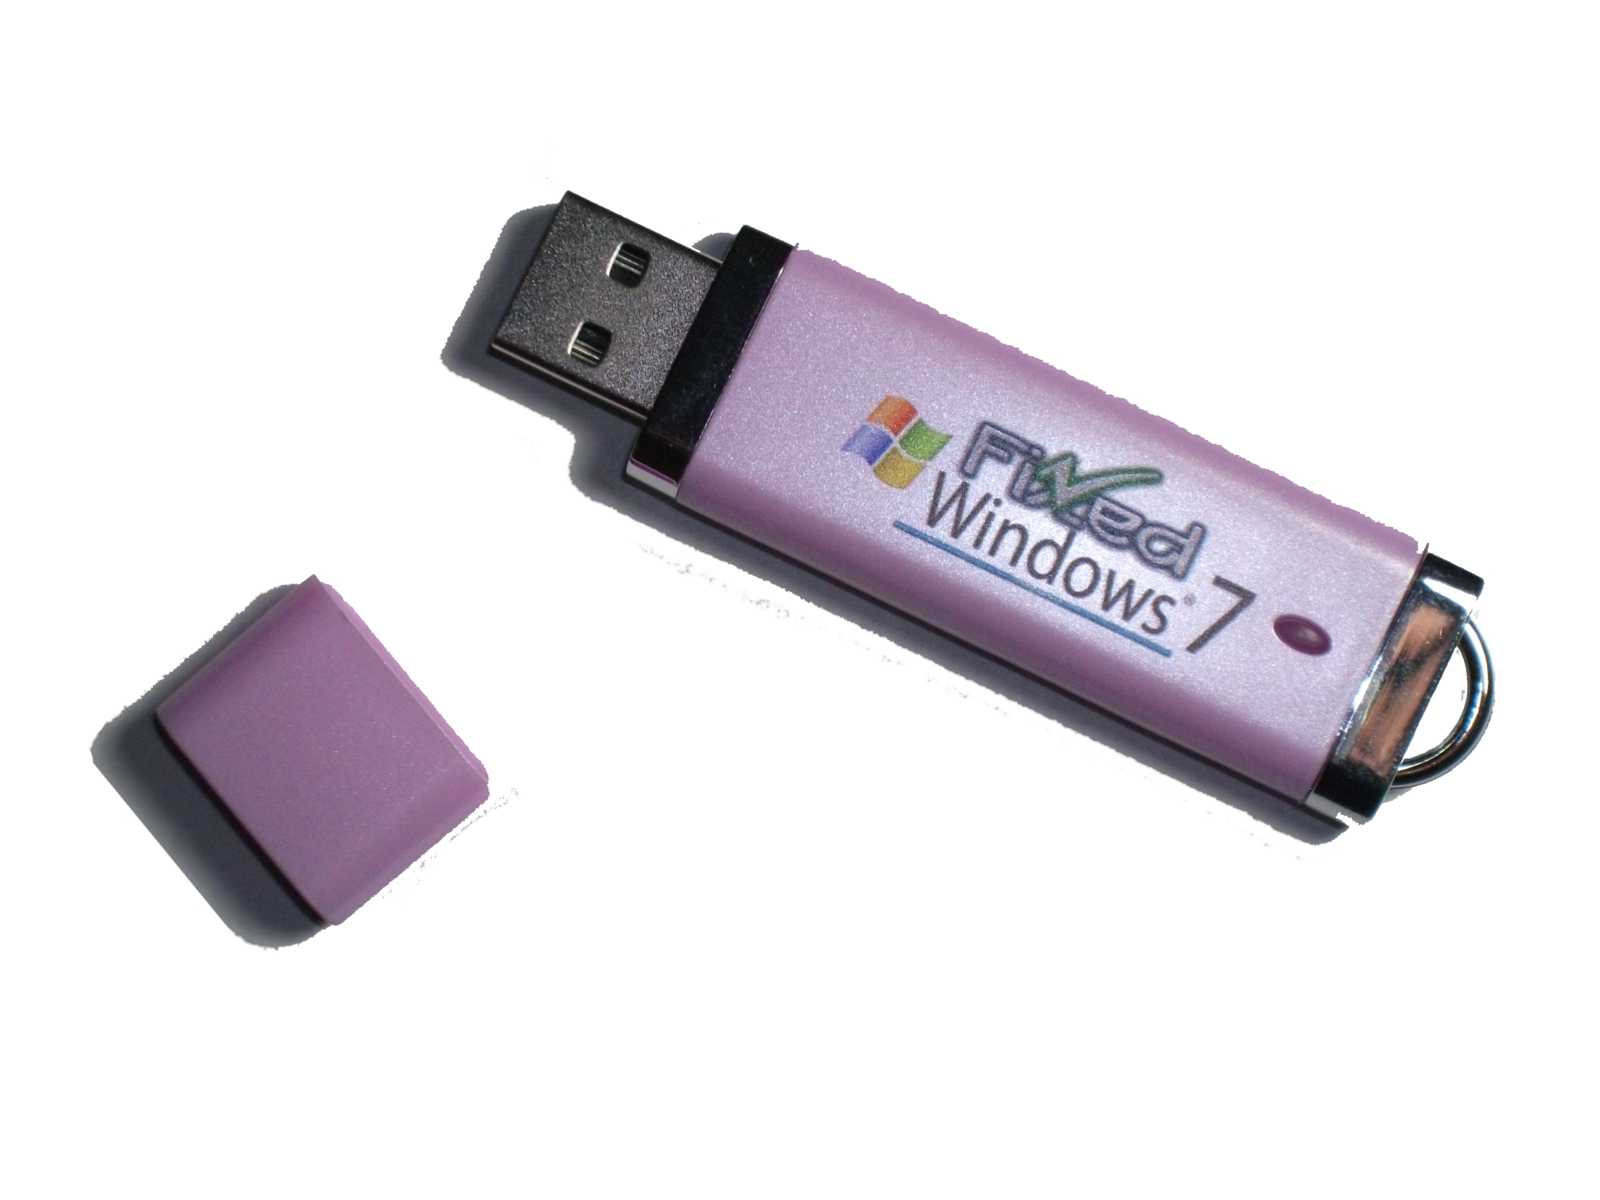 ON USB-WINDOWS 7 x64/64 All Versions-Repair/Recovery/Fresh Install - $12.95